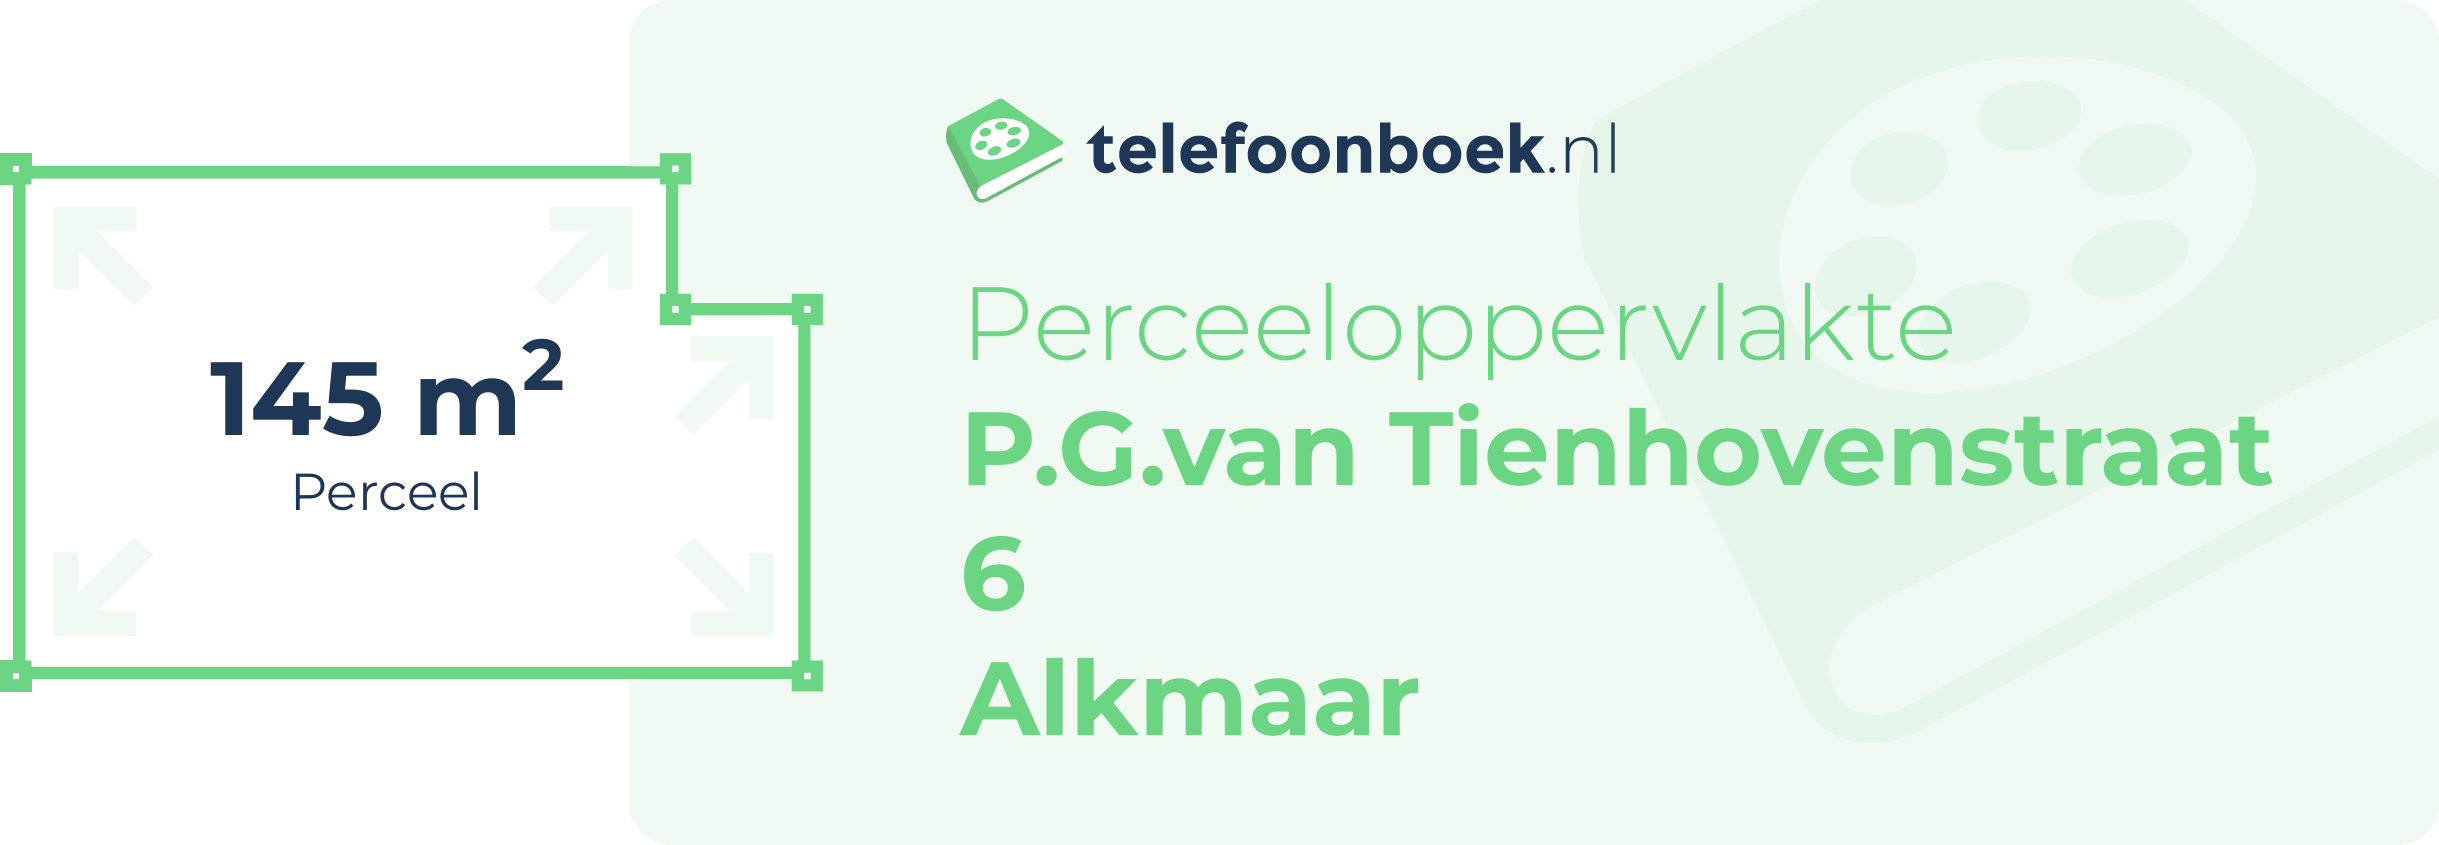 Perceeloppervlakte P.G.van Tienhovenstraat 6 Alkmaar